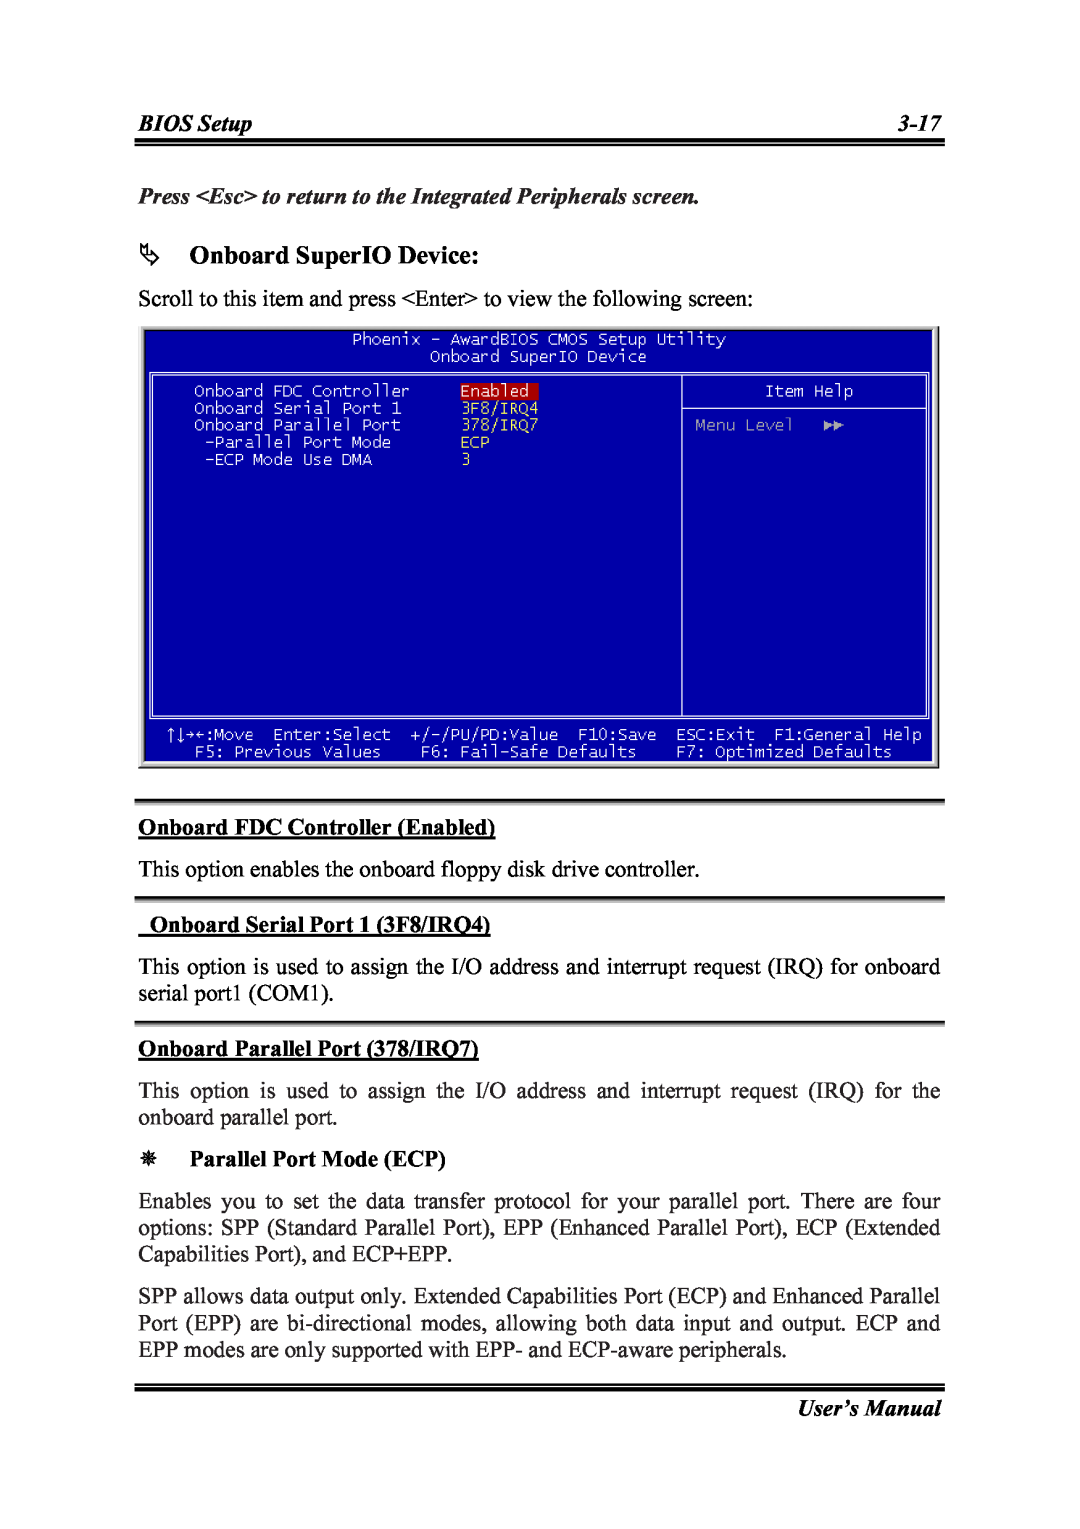 Intel SG-81, SG-80 user manual Onboard SuperIO Device, BIOS Setup, 3-17, User’s Manual 